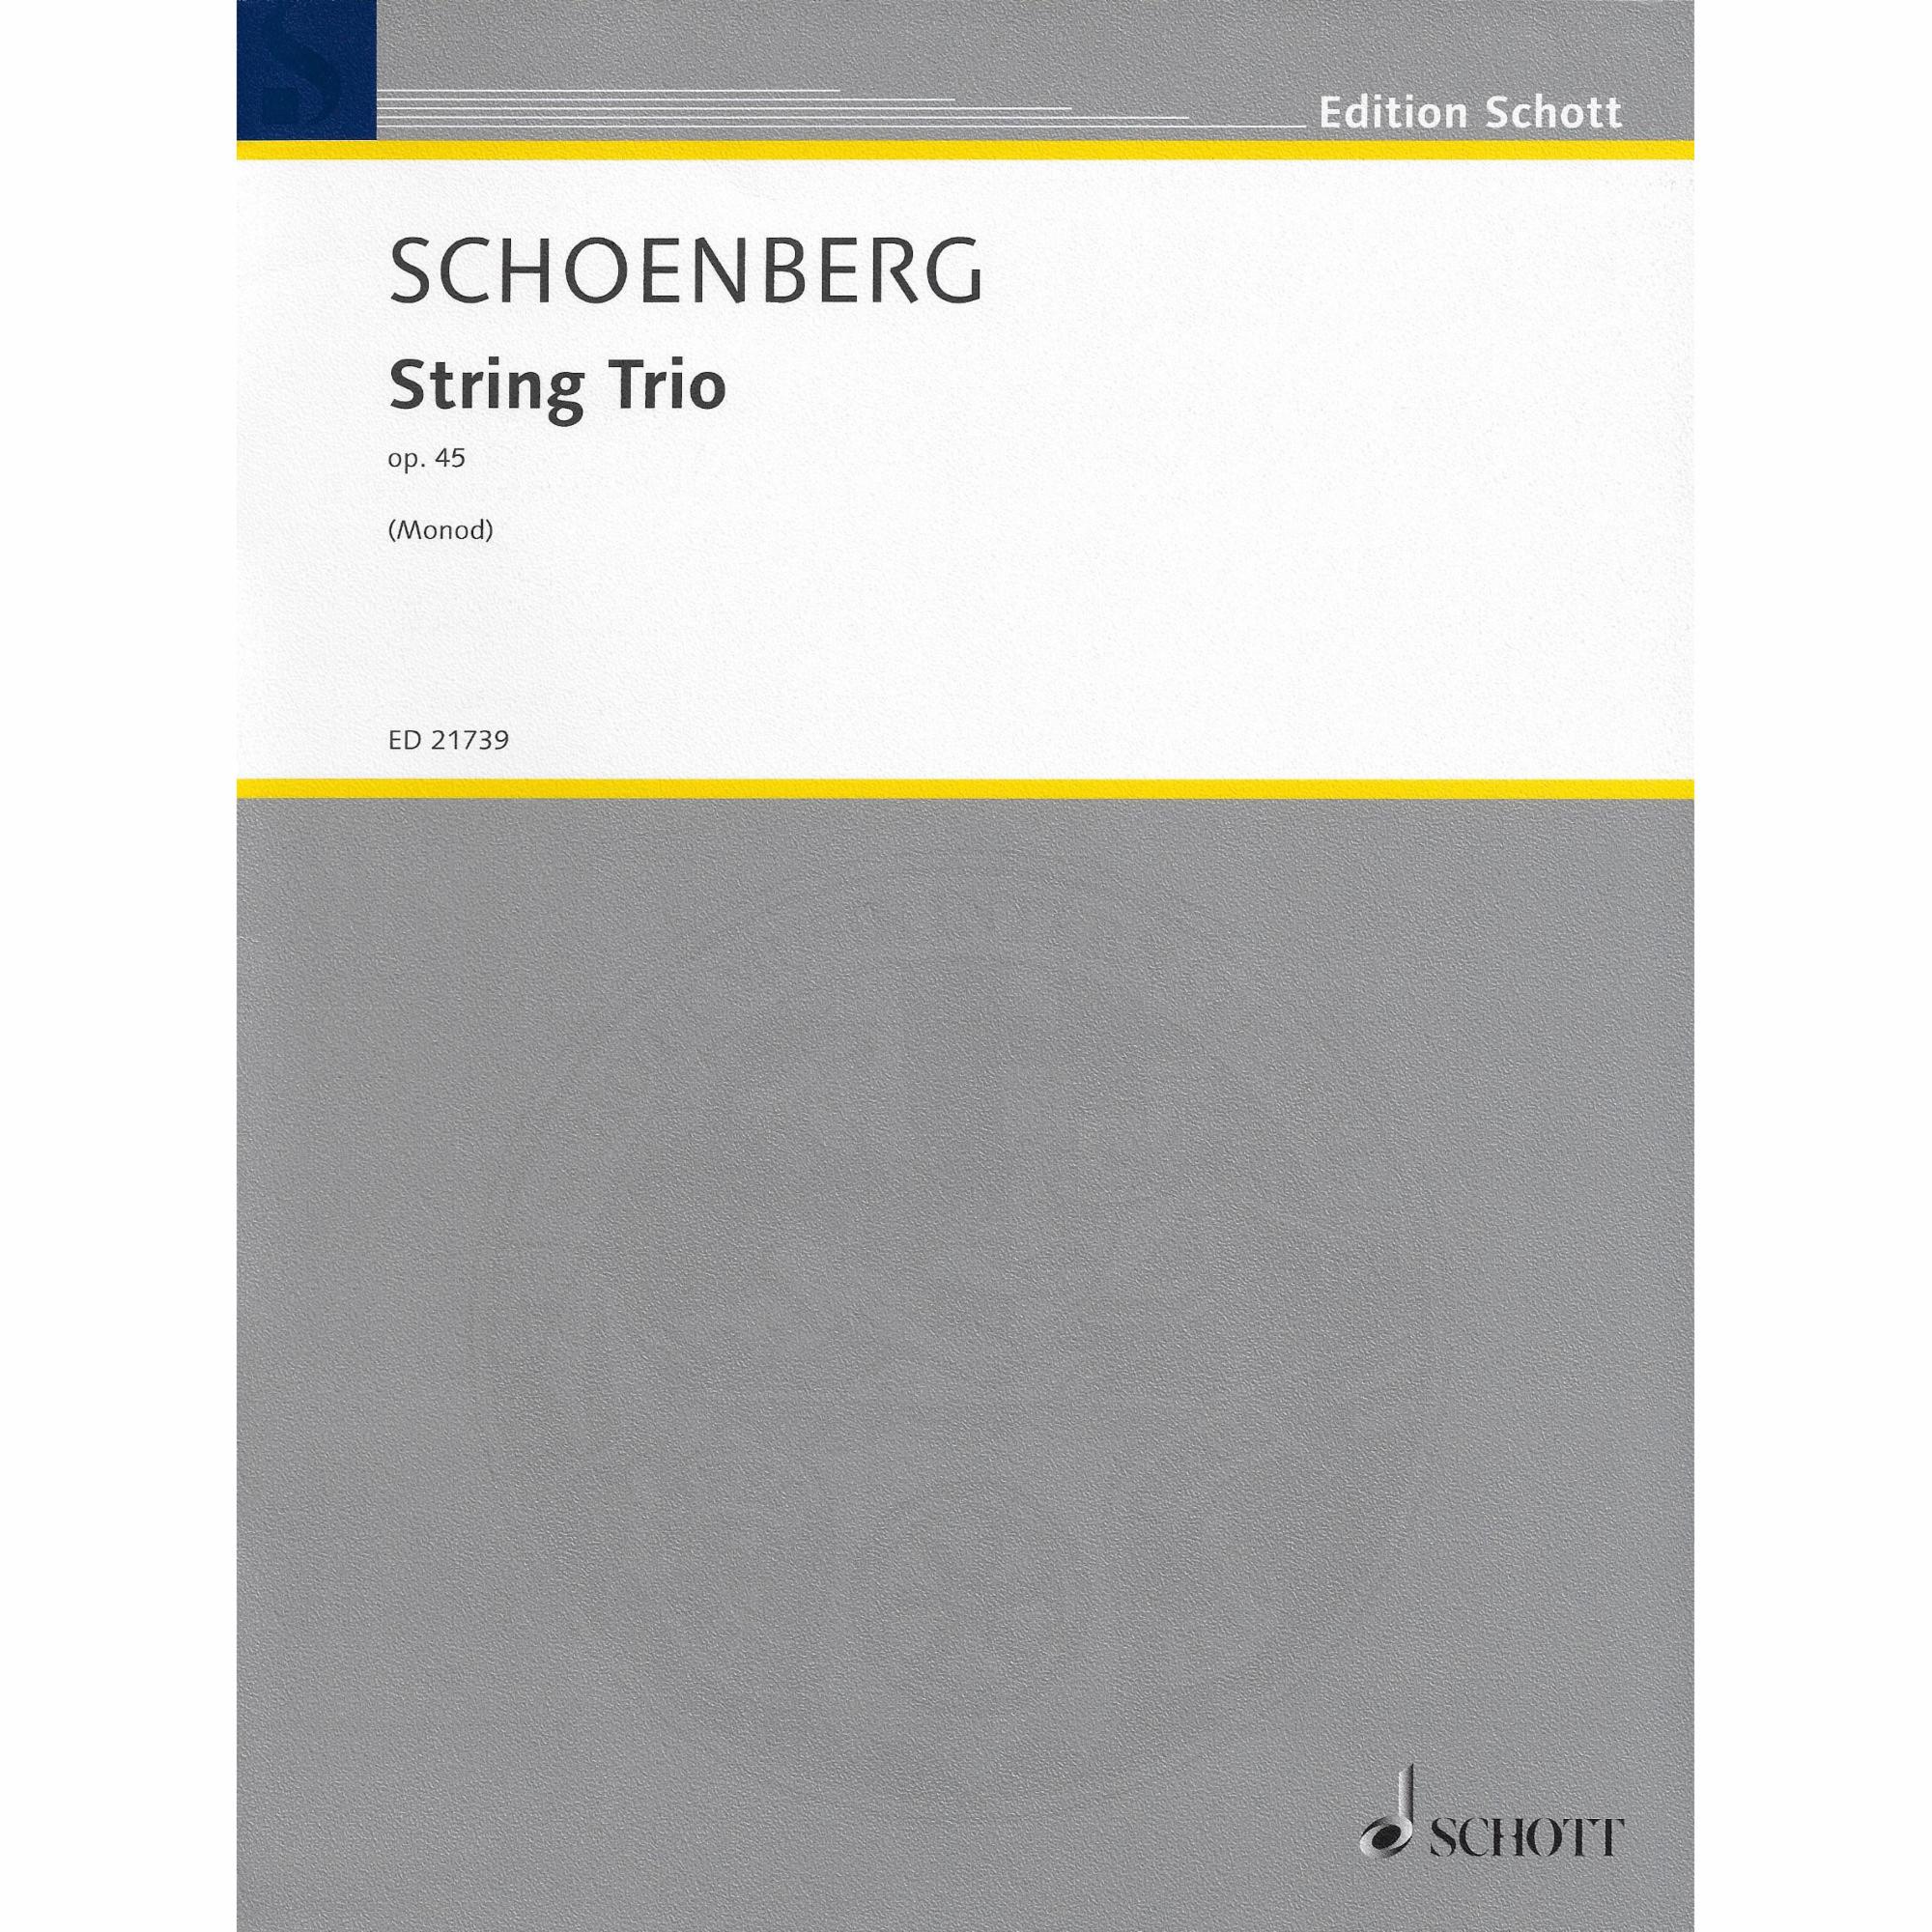 Schoenberg -- String Trio, Op. 45 for Violin, Viola, and Cello